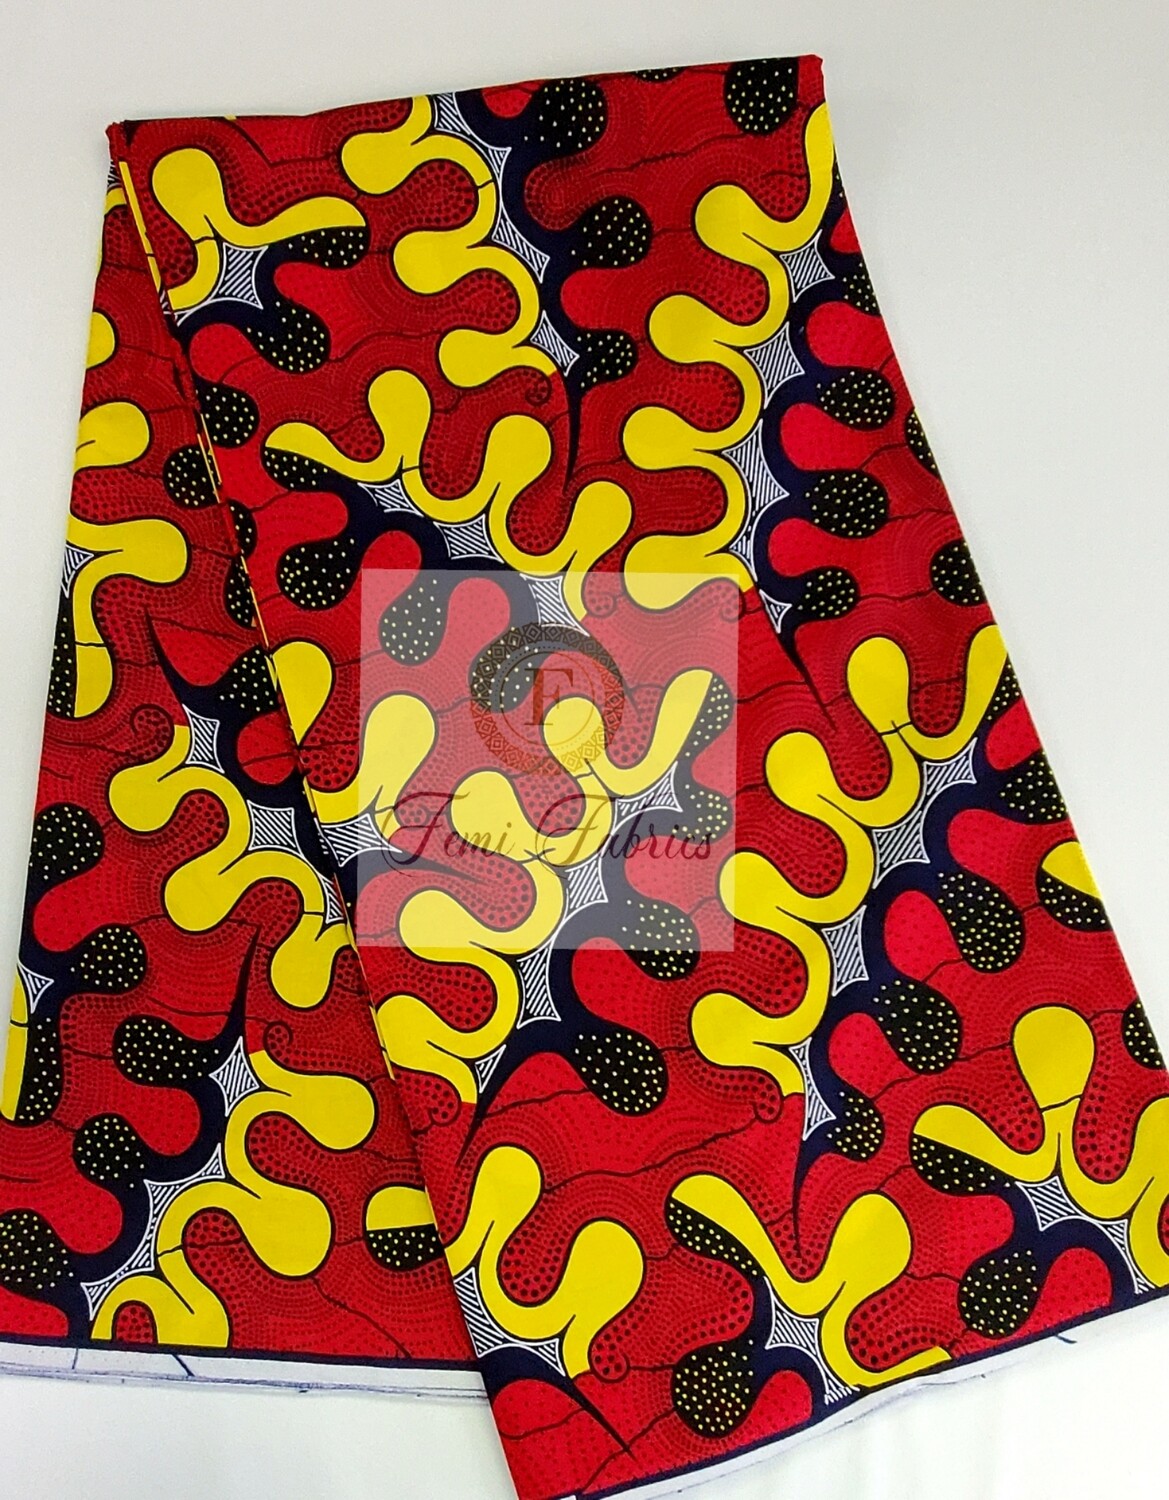 Red Yellow Marrow/Ankara/African Print Fabric